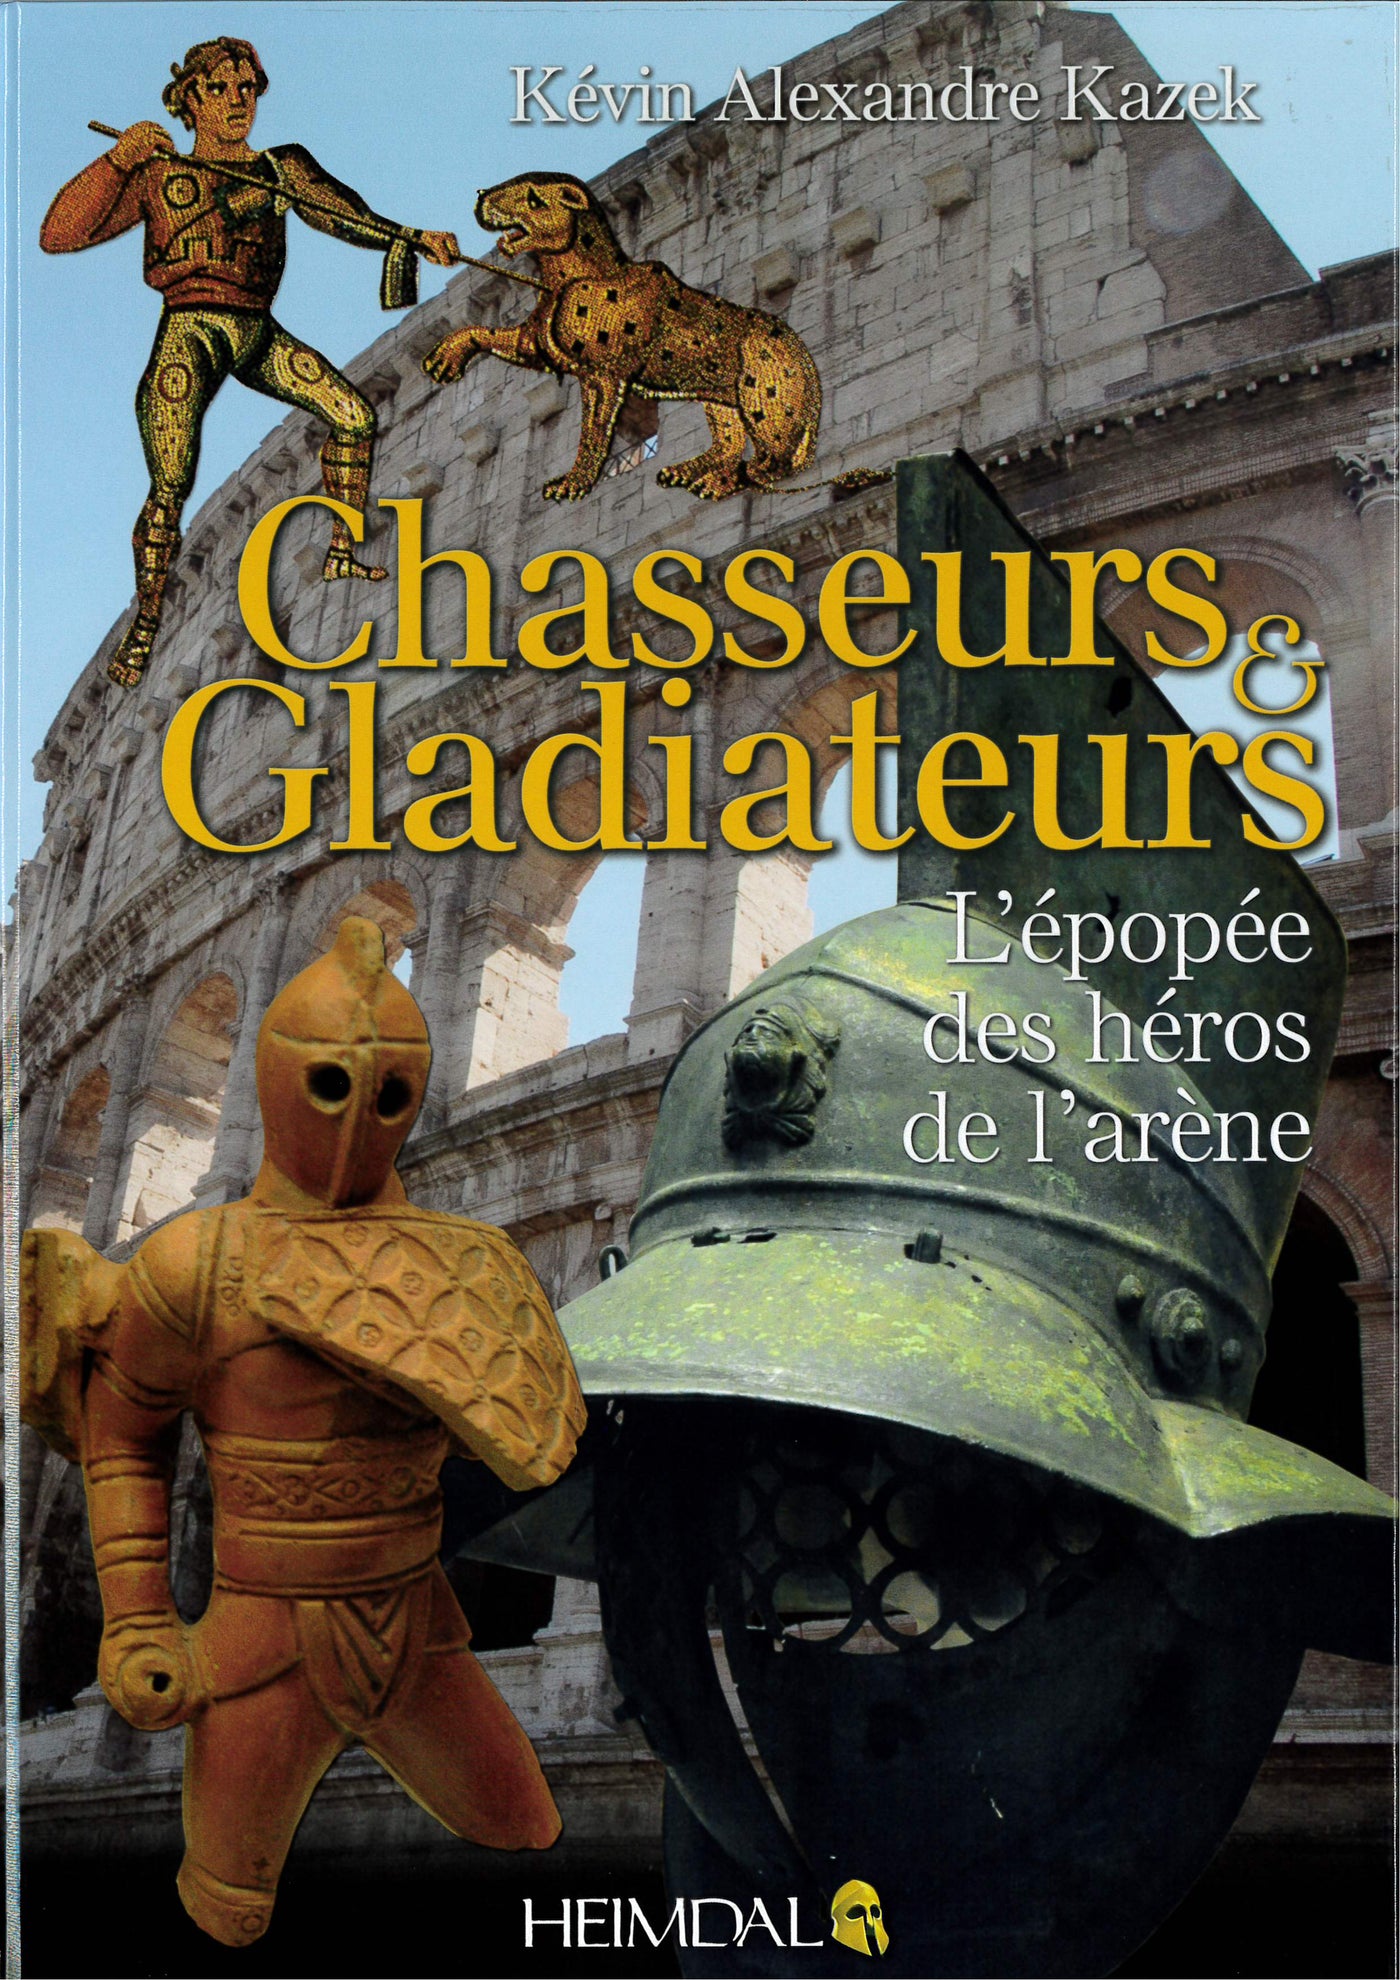 Chasseurs et Gladiateurs